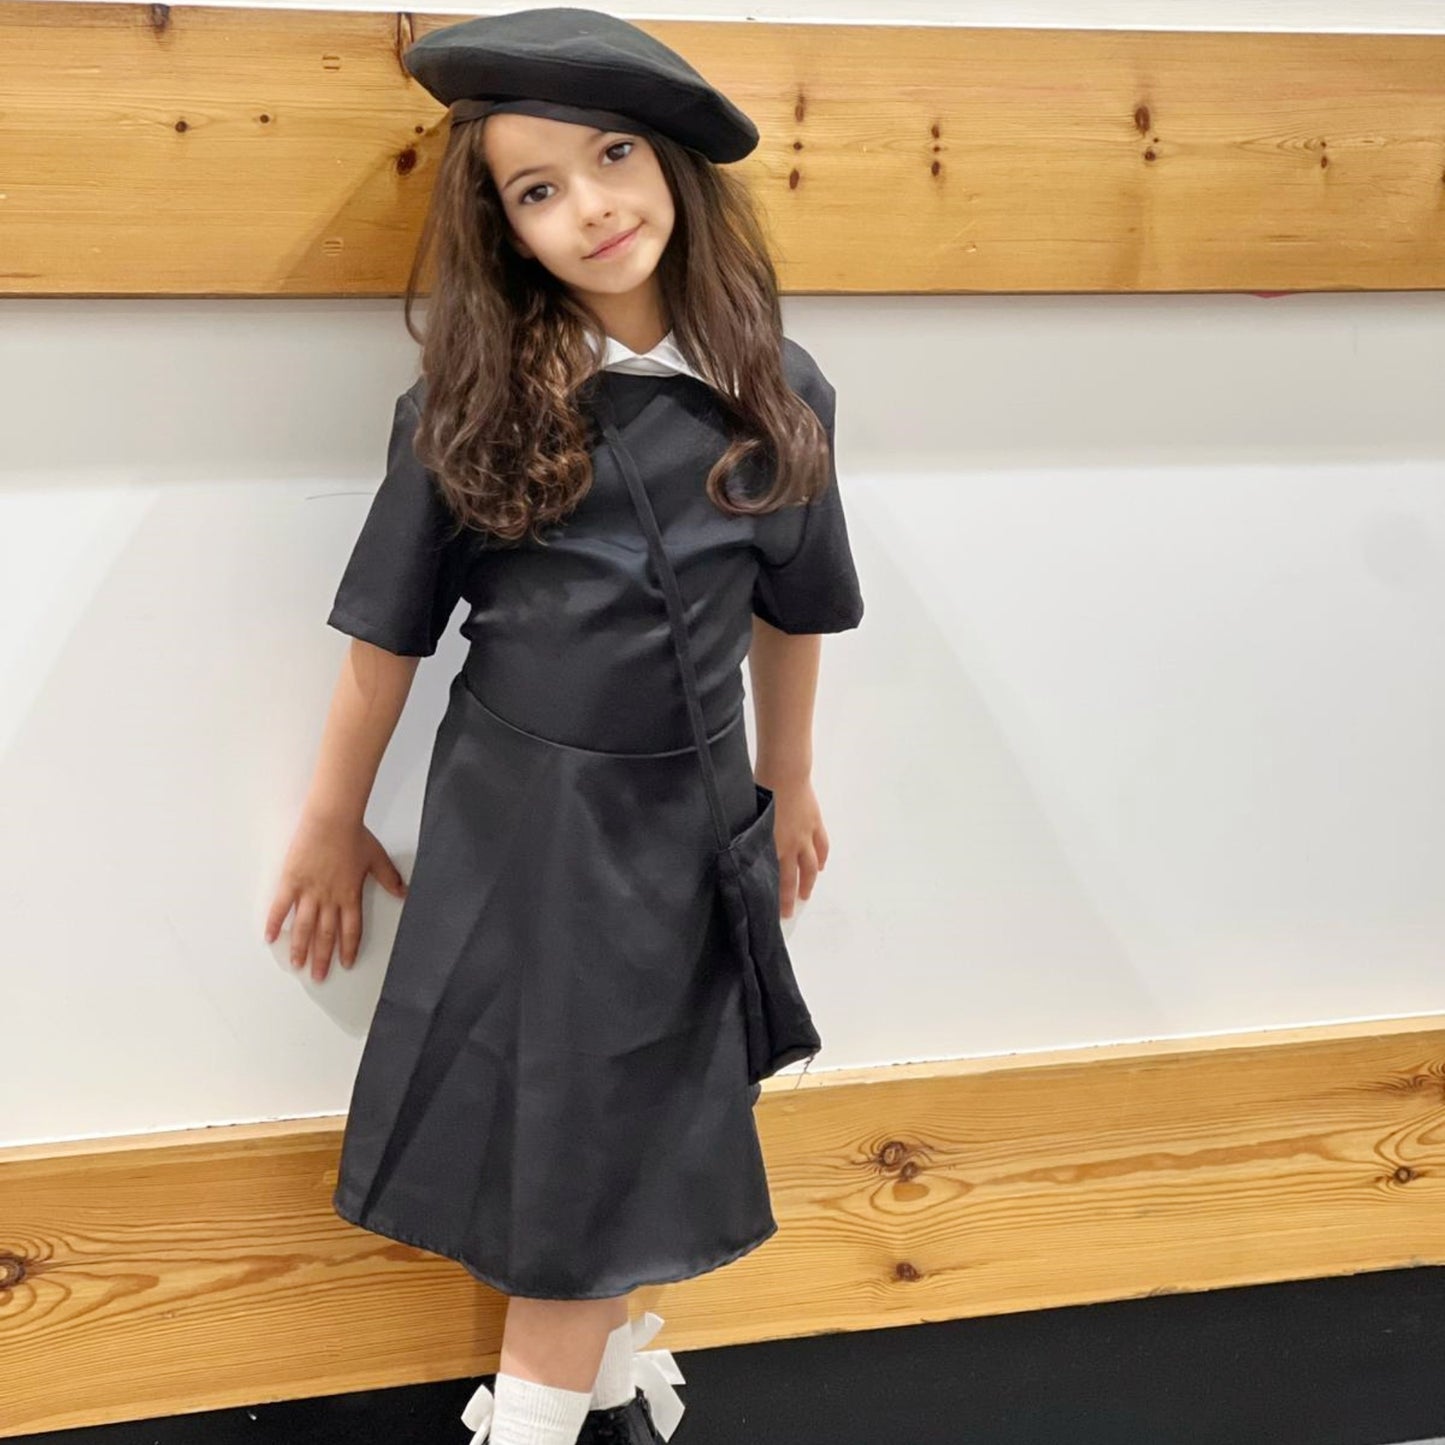 Wednesday Addams Costume Girls Dress for Kids Black